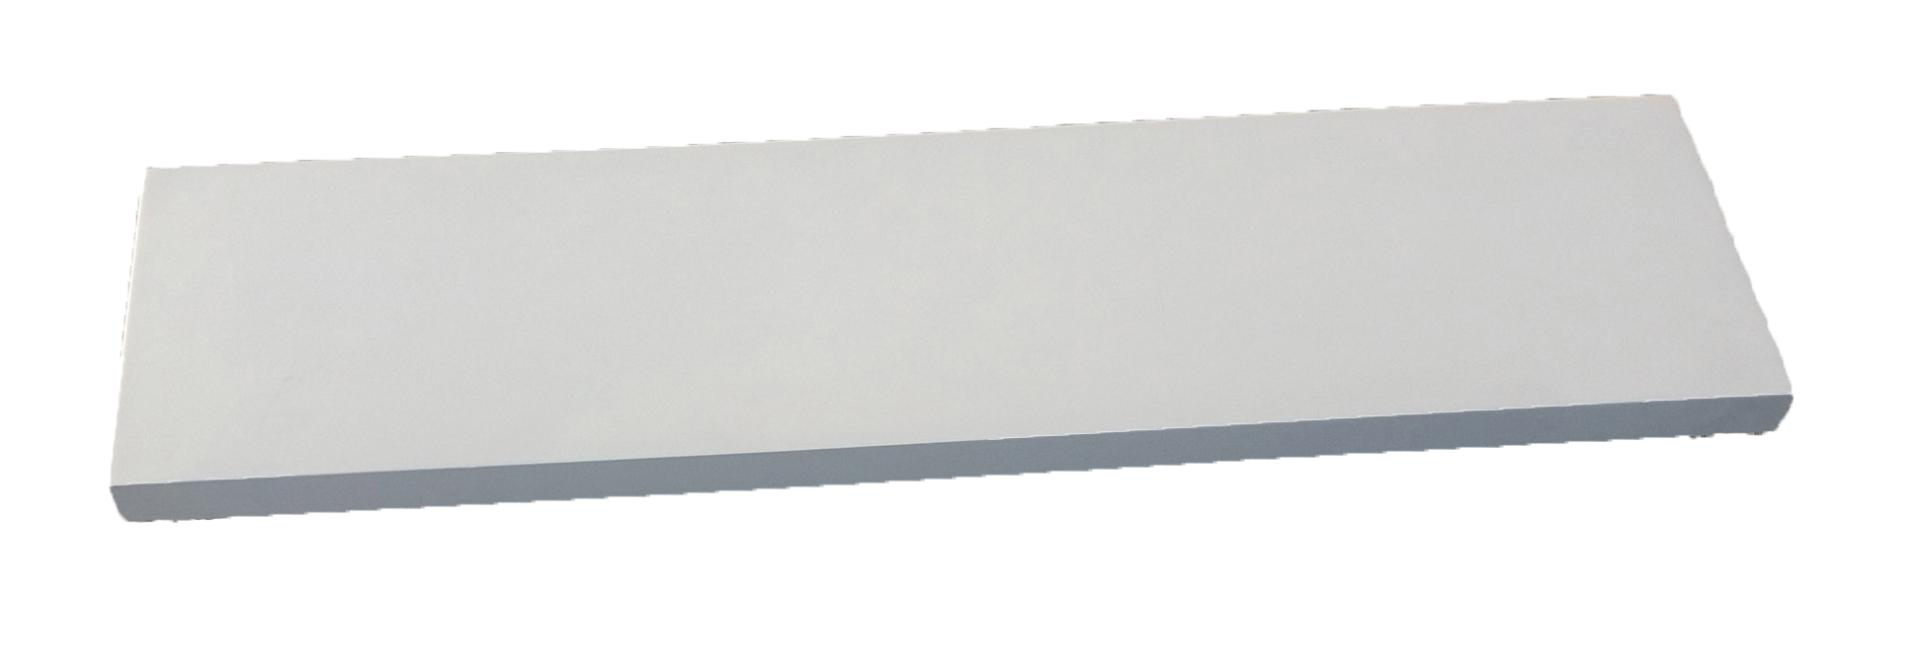 couvertine-plate-100x25x3-5cm-blanc-edycem-0